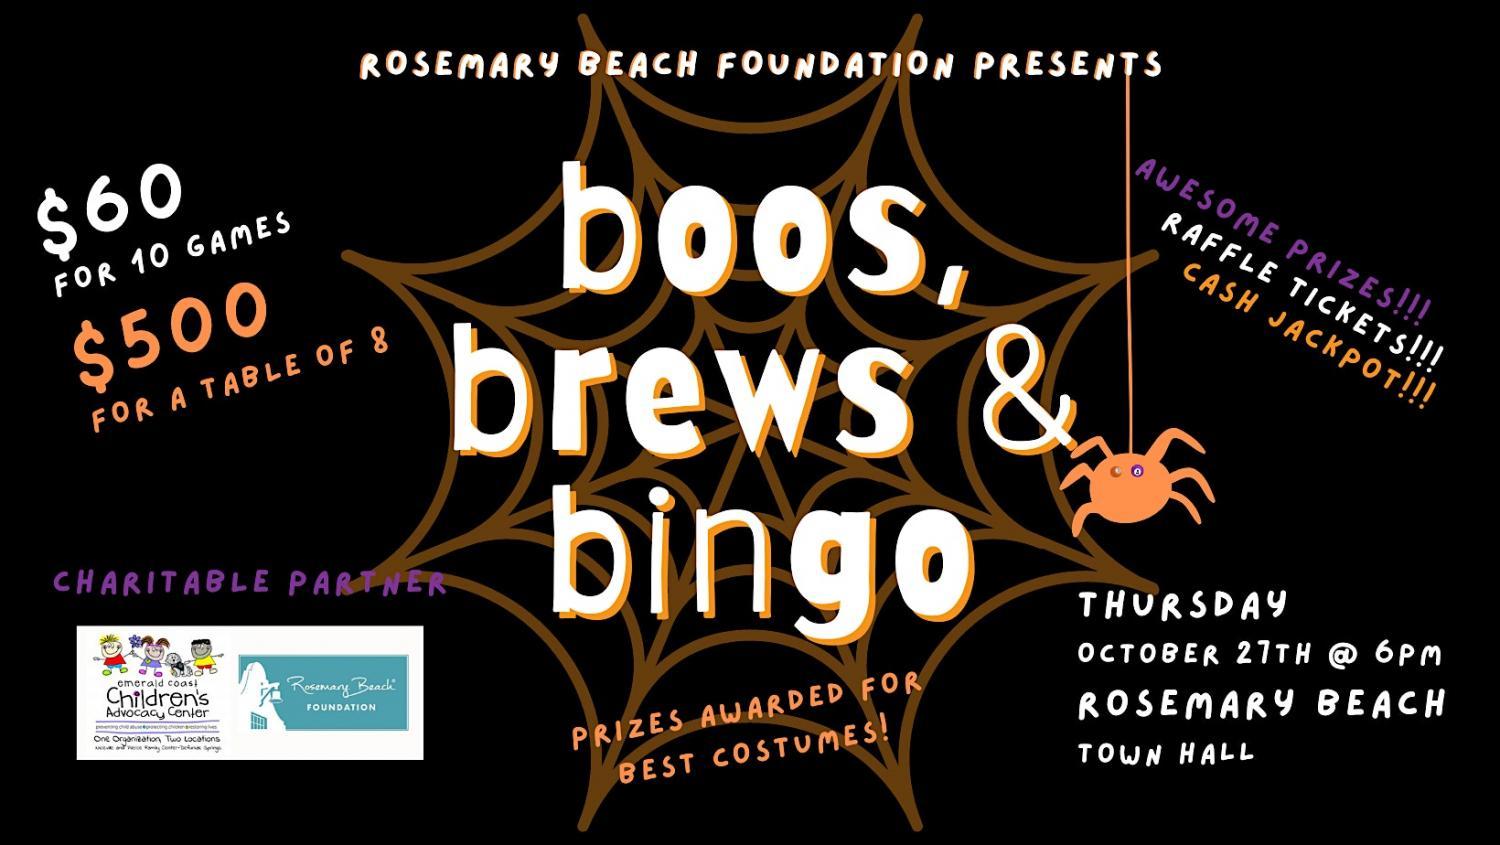 Bingo Night -- Boos Brews & Bingo
Thu Oct 27, 7:00 PM - Thu Oct 27, 7:00 PM
in 7 days